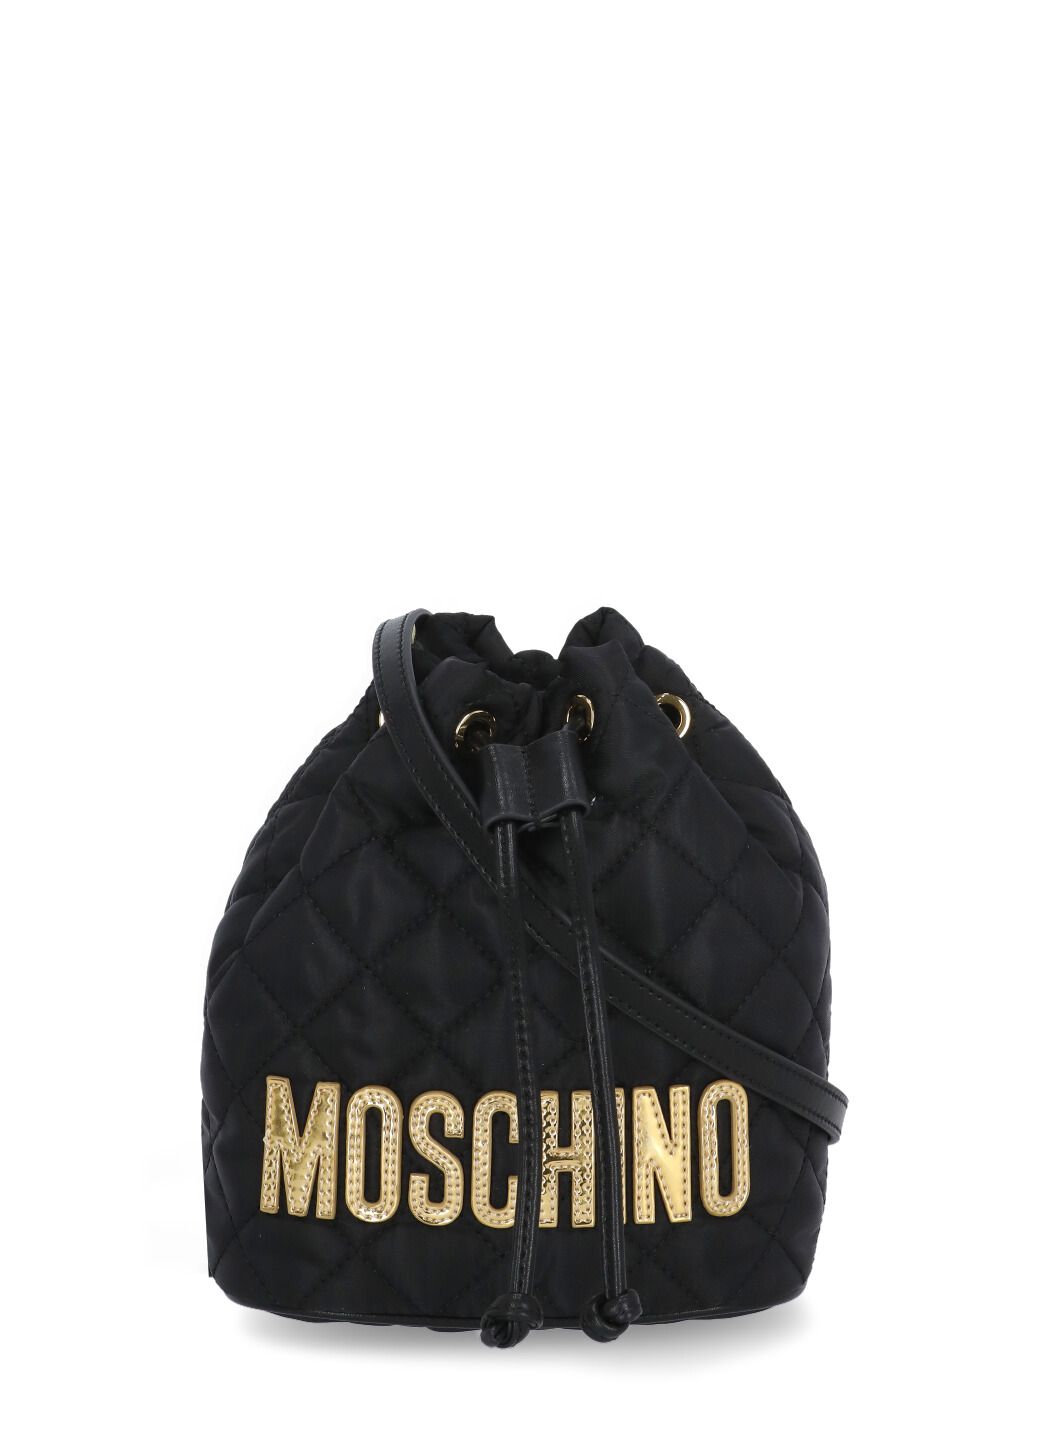 Morphed Lettering Quilted Shoulder Bag Unisex Black Moschino